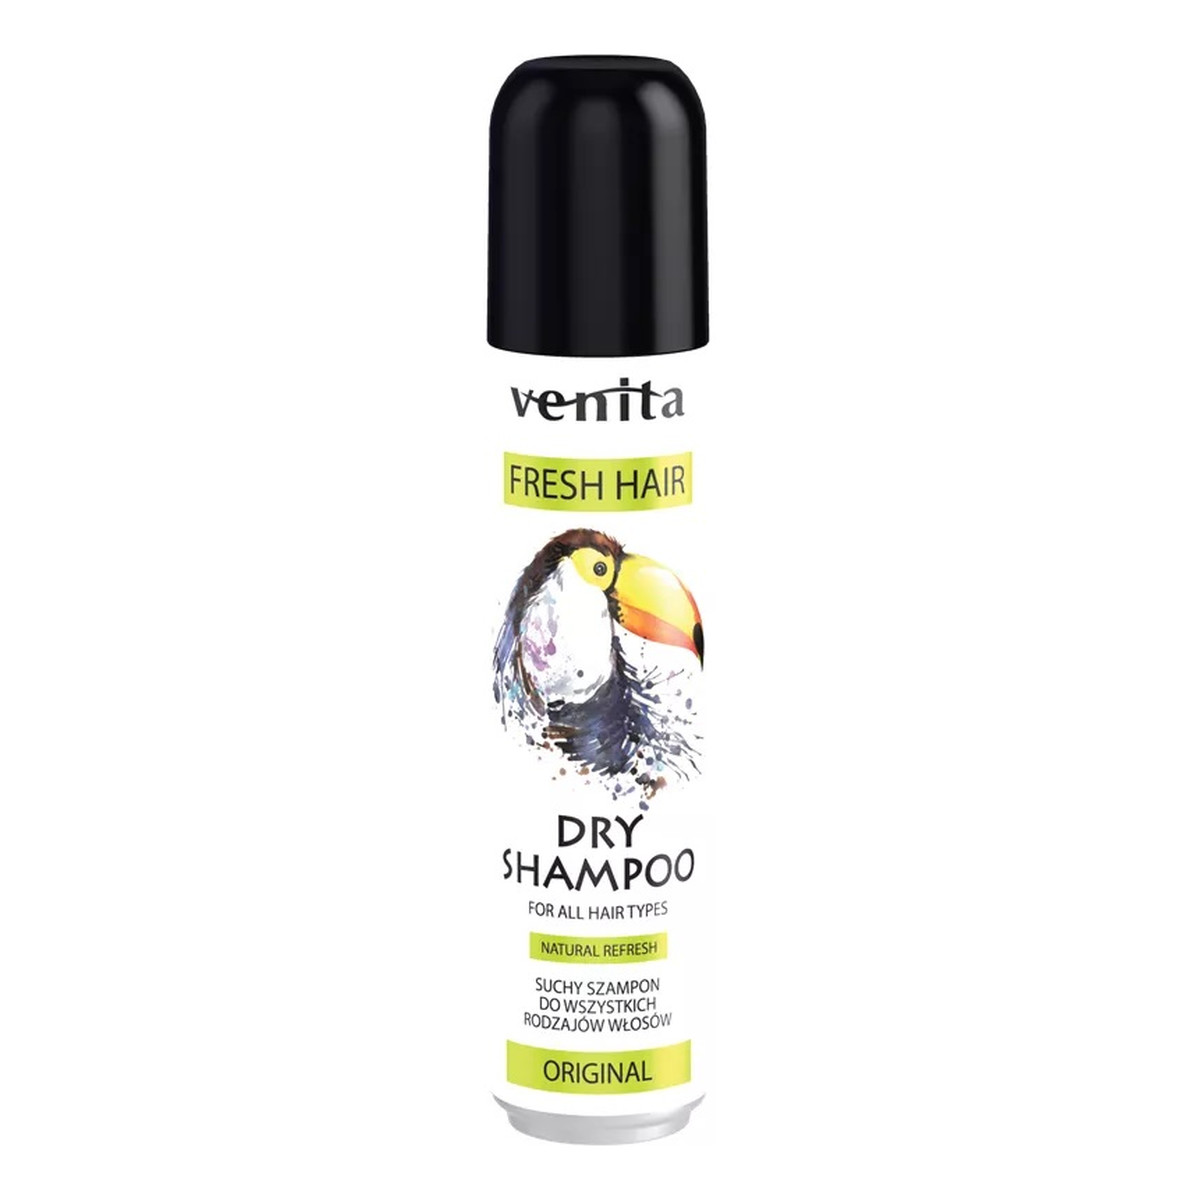 Venita Fresh hair dry shampoo suchy szampon do włosów original 75ml